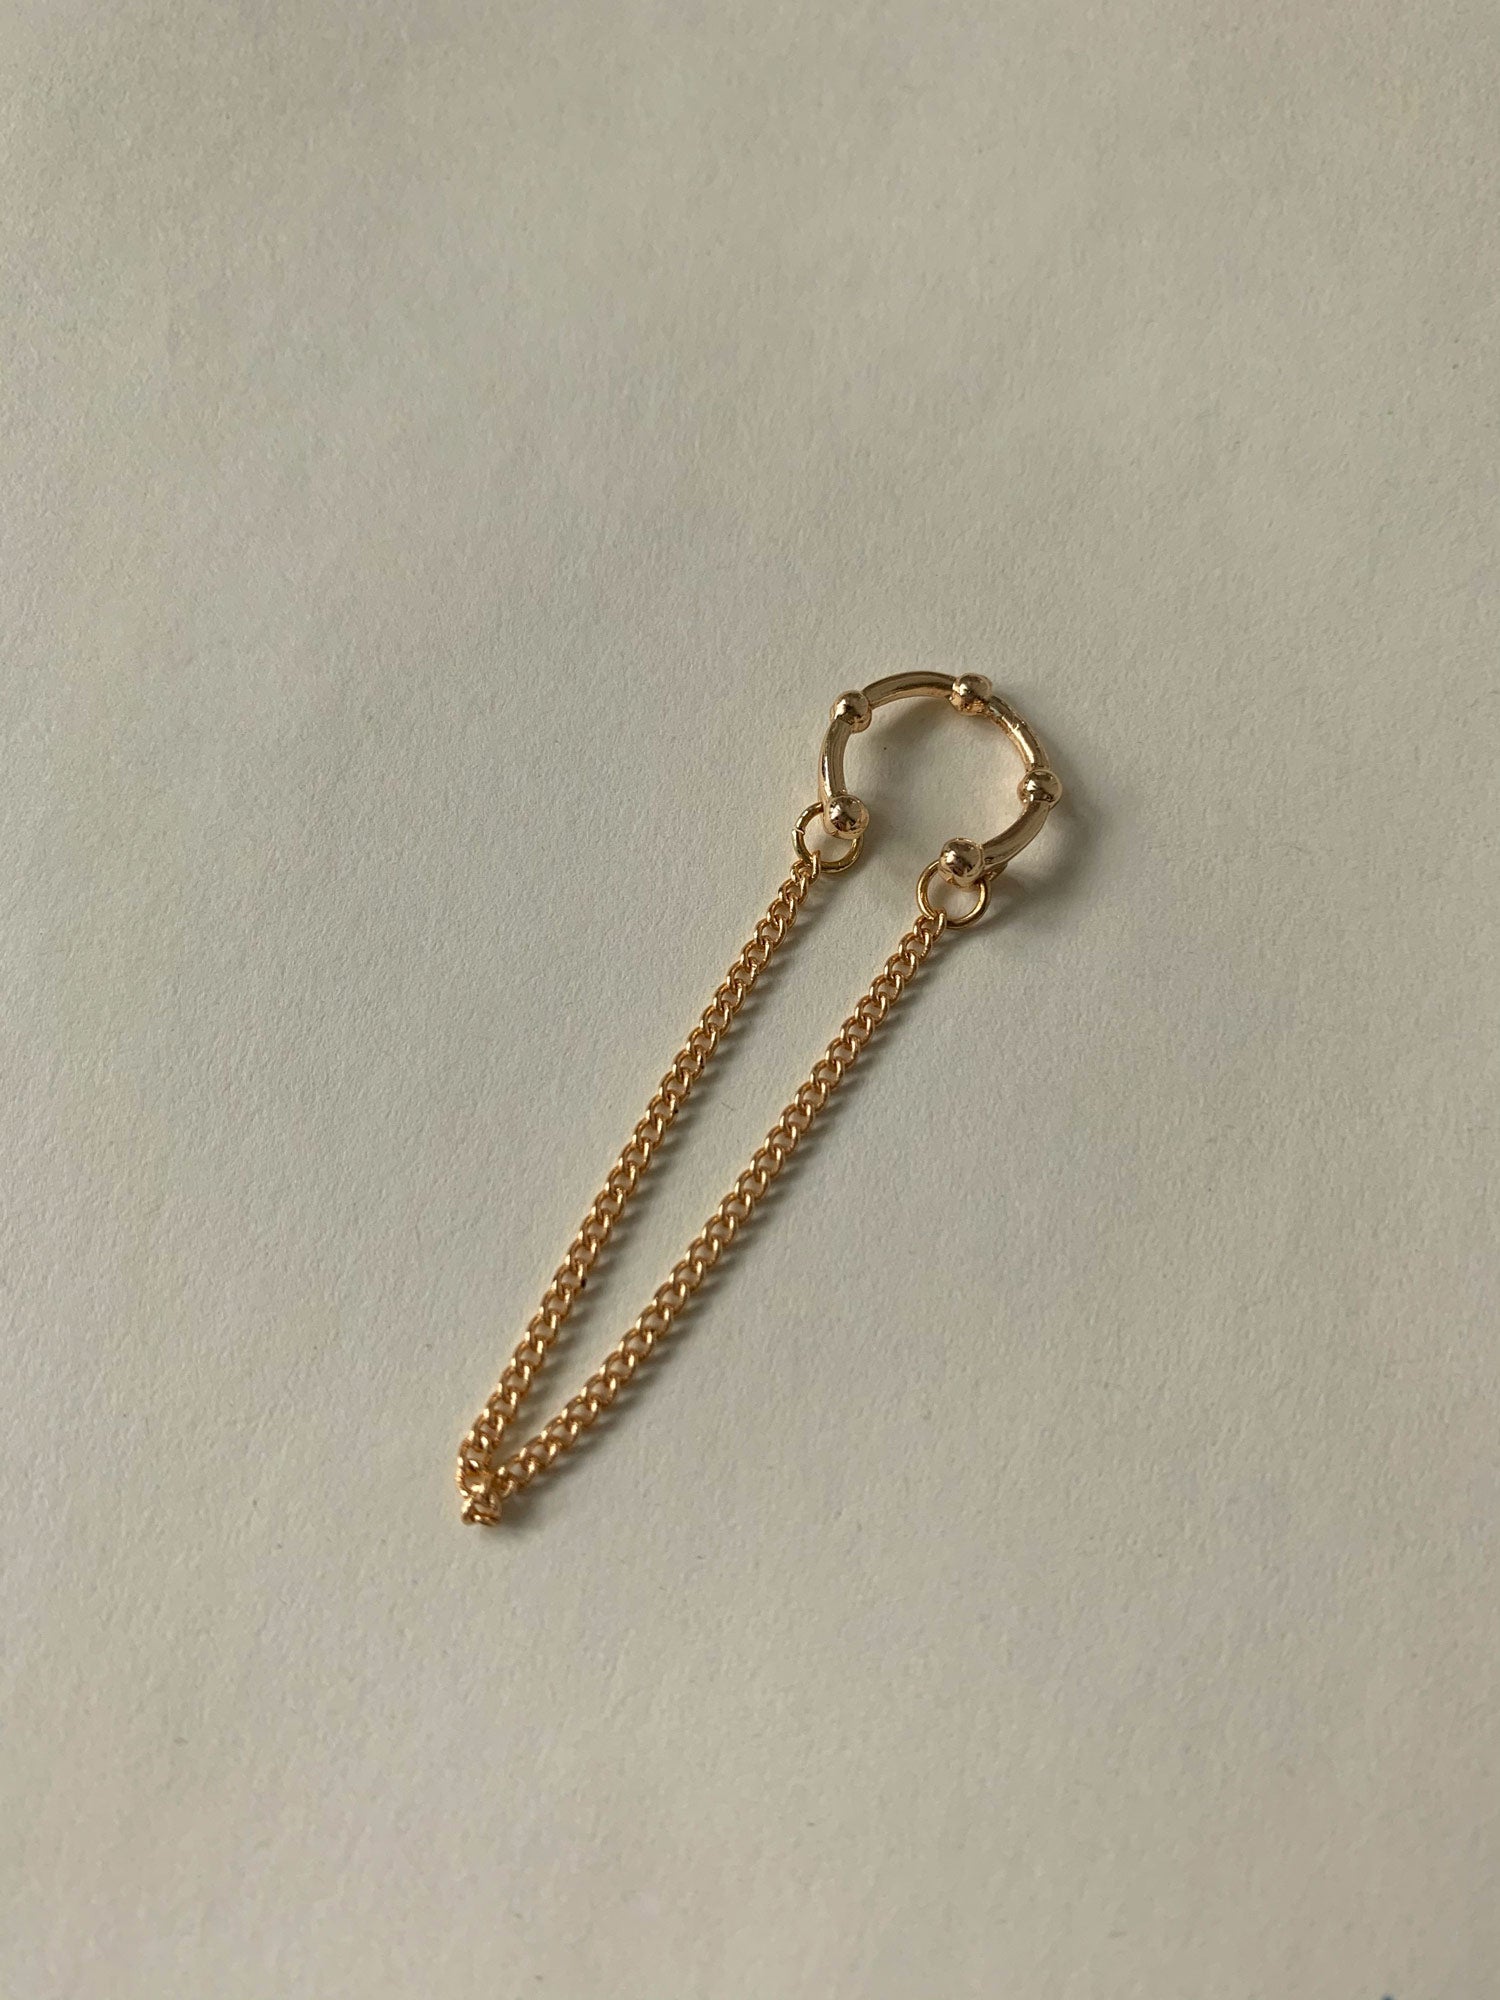 chain gold1